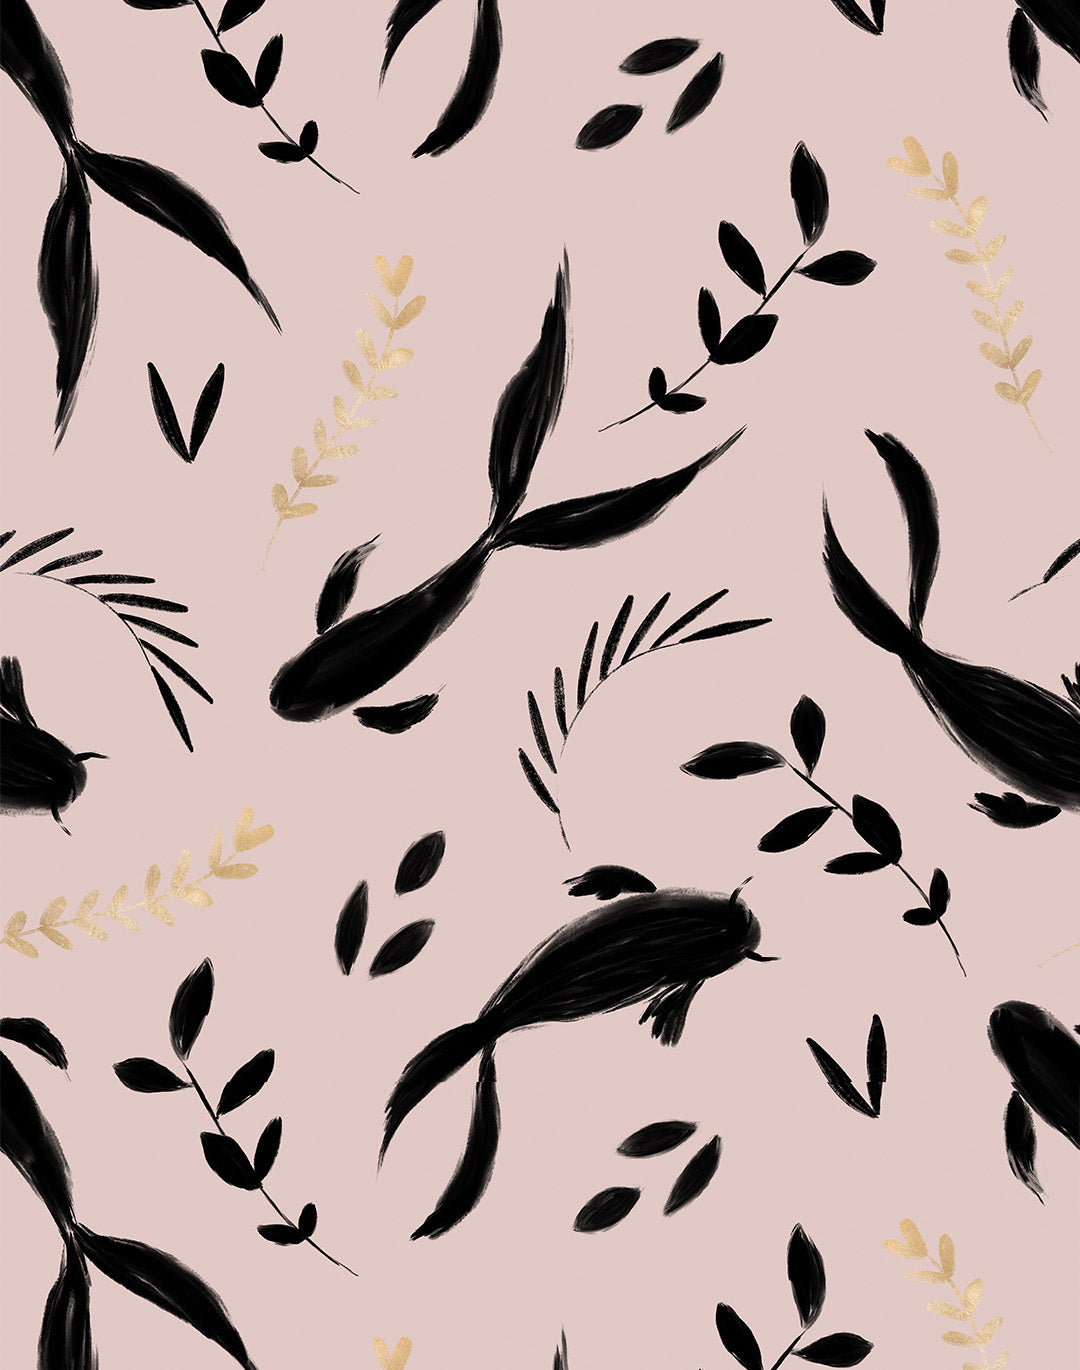 Koi Koi Koi - Koi Fish Patterned Pink Wallpaper